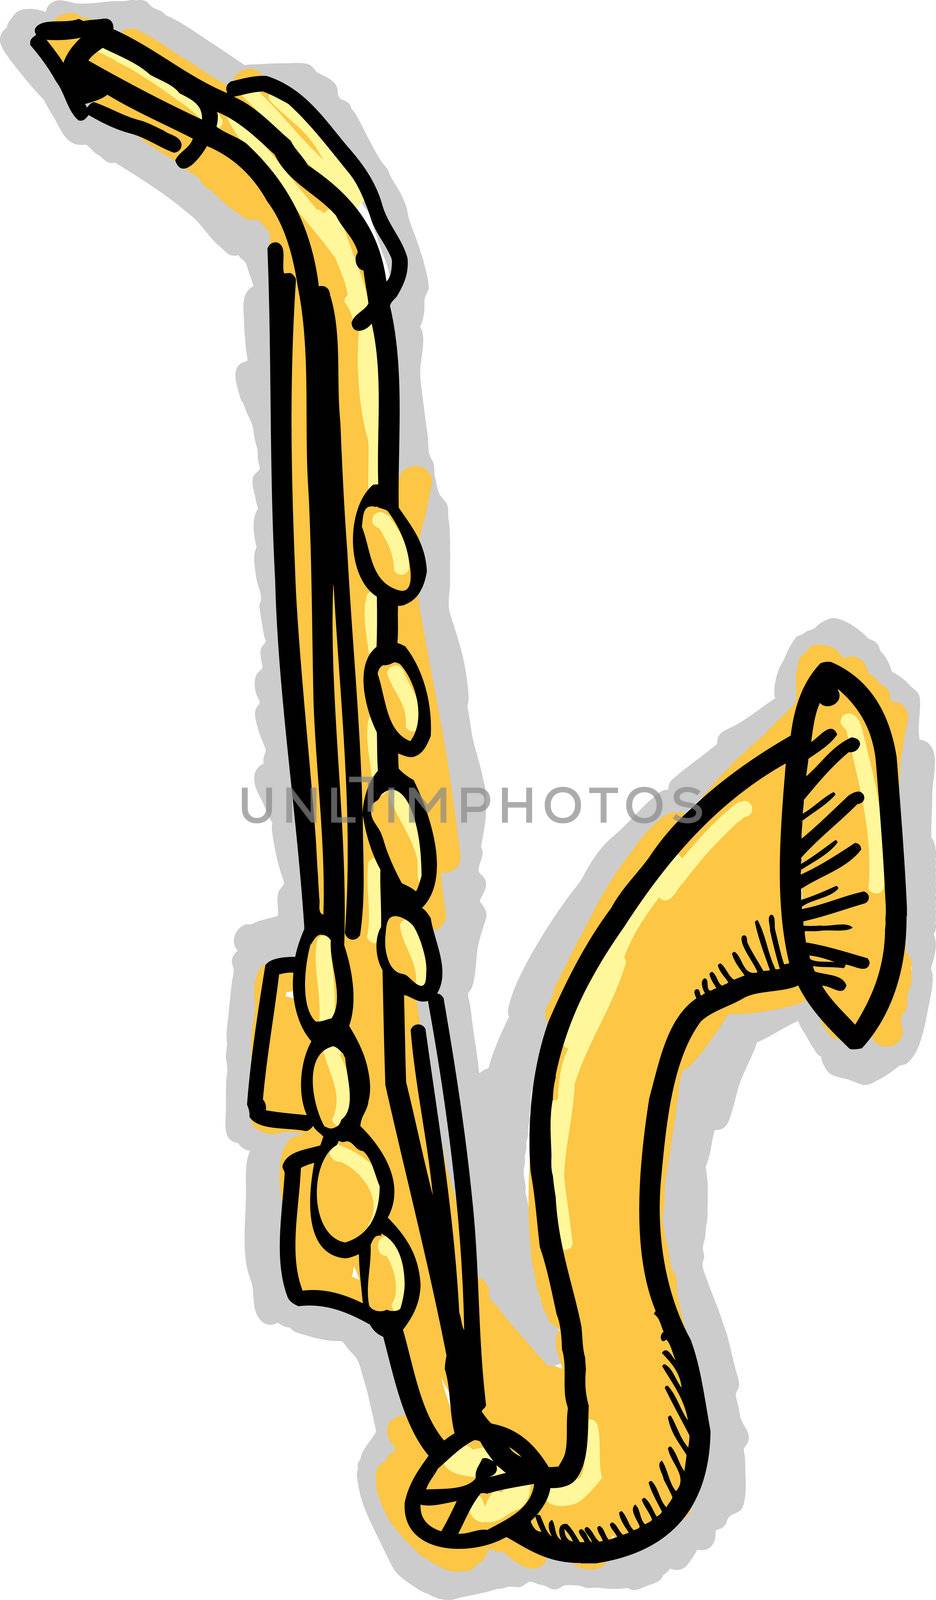 Saxophone Doodle by TheBlackRhino